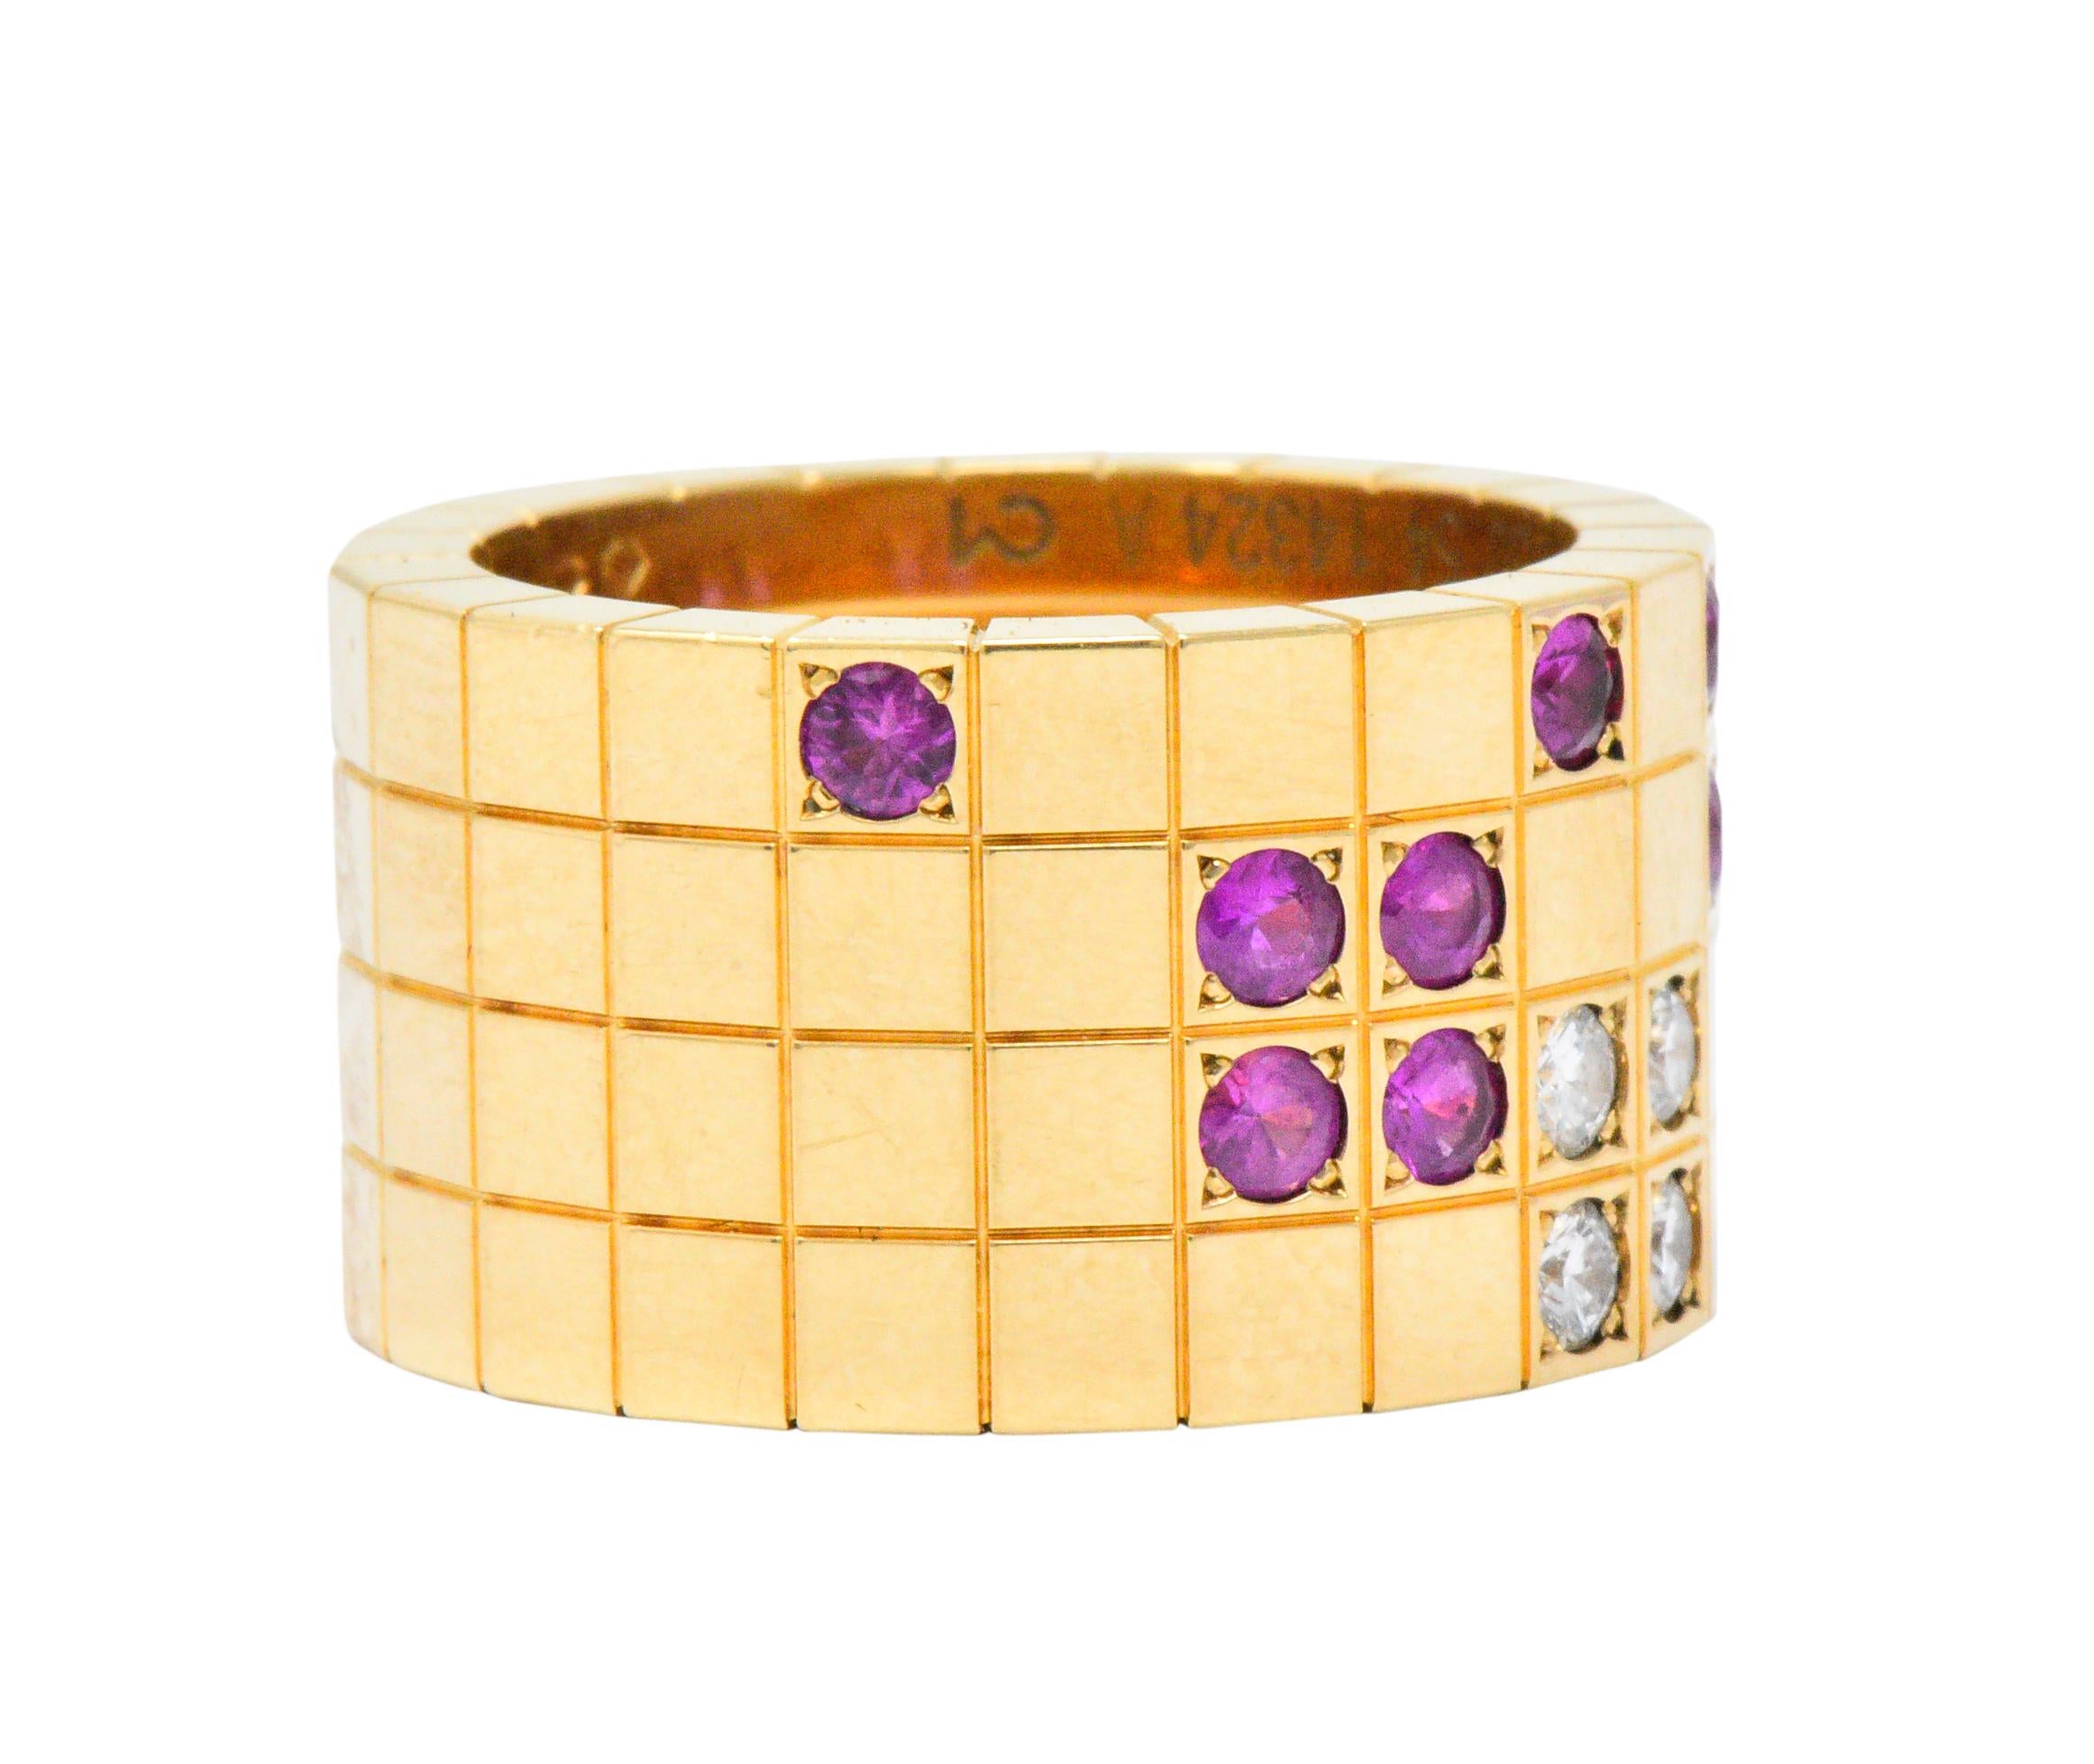 Contemporary Cartier Lanieres Diamond Sapphire 18 Karat Yellow Gold Wide Band Ring